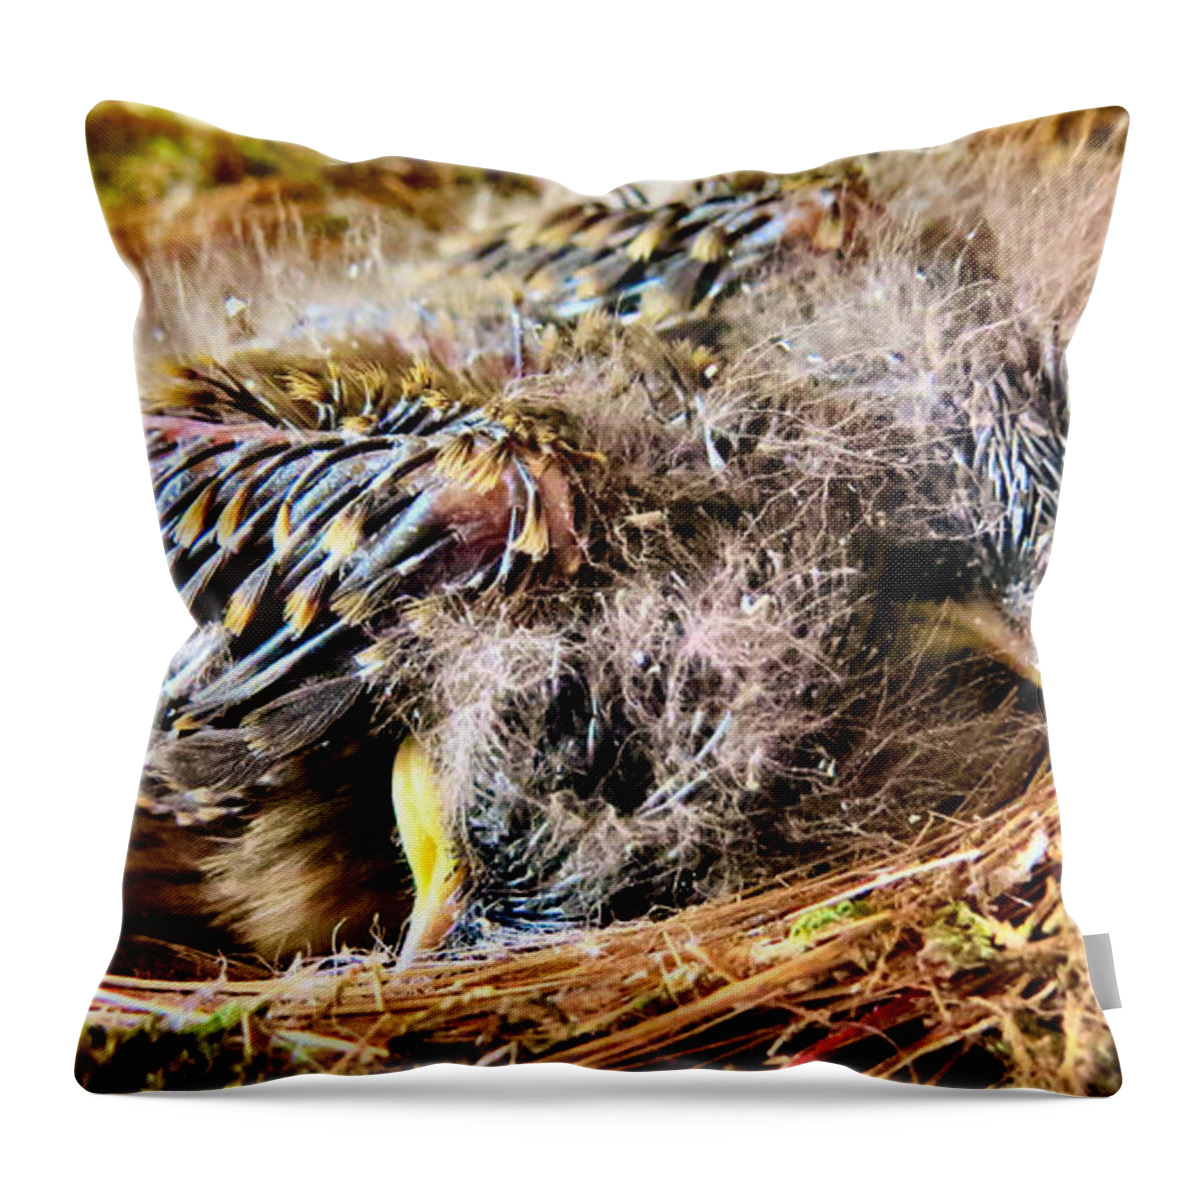 Bird Throw Pillow featuring the photograph Nestled by Art Dingo